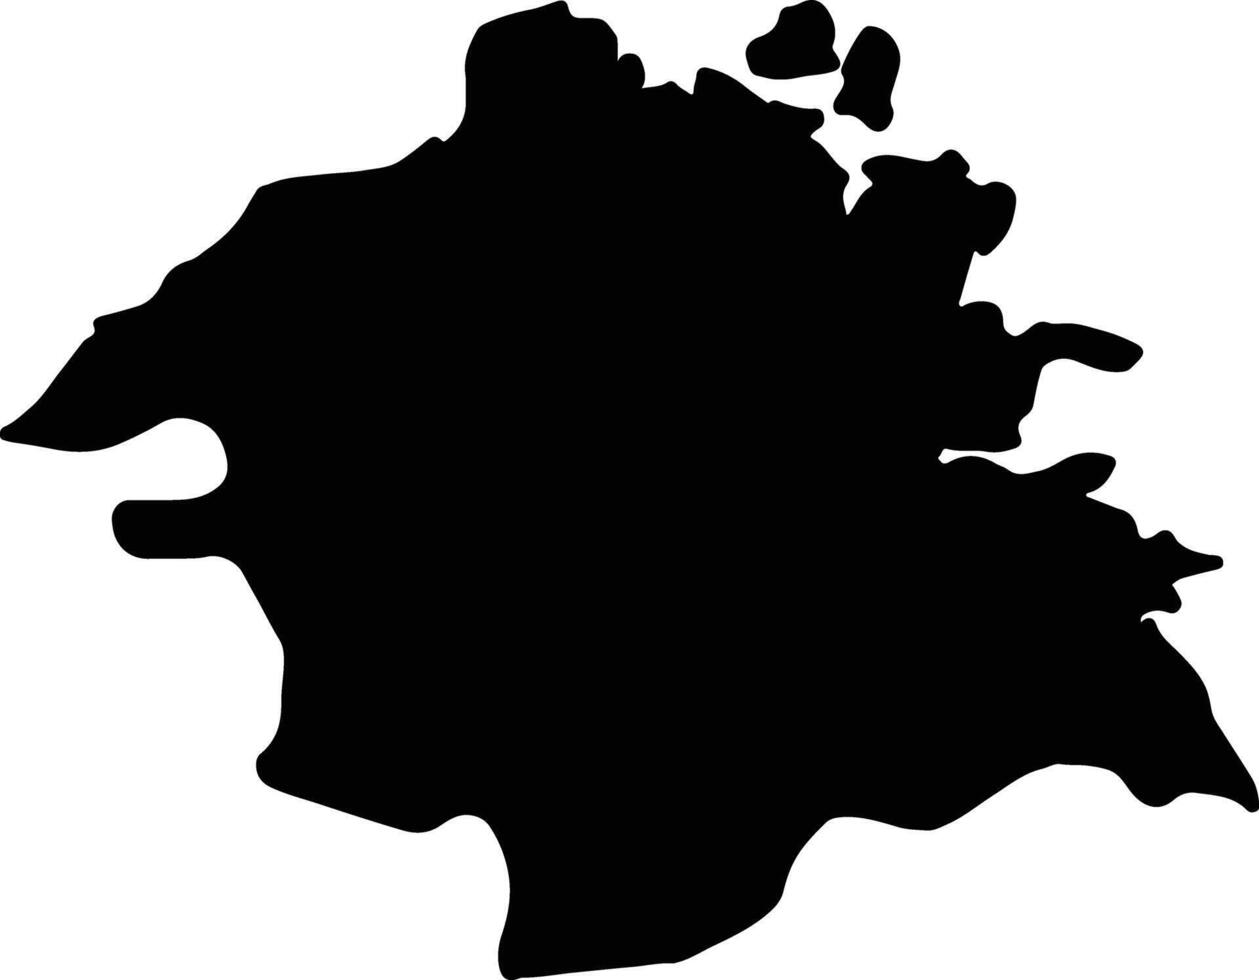 Olbia-Tempio Italy silhouette map vector